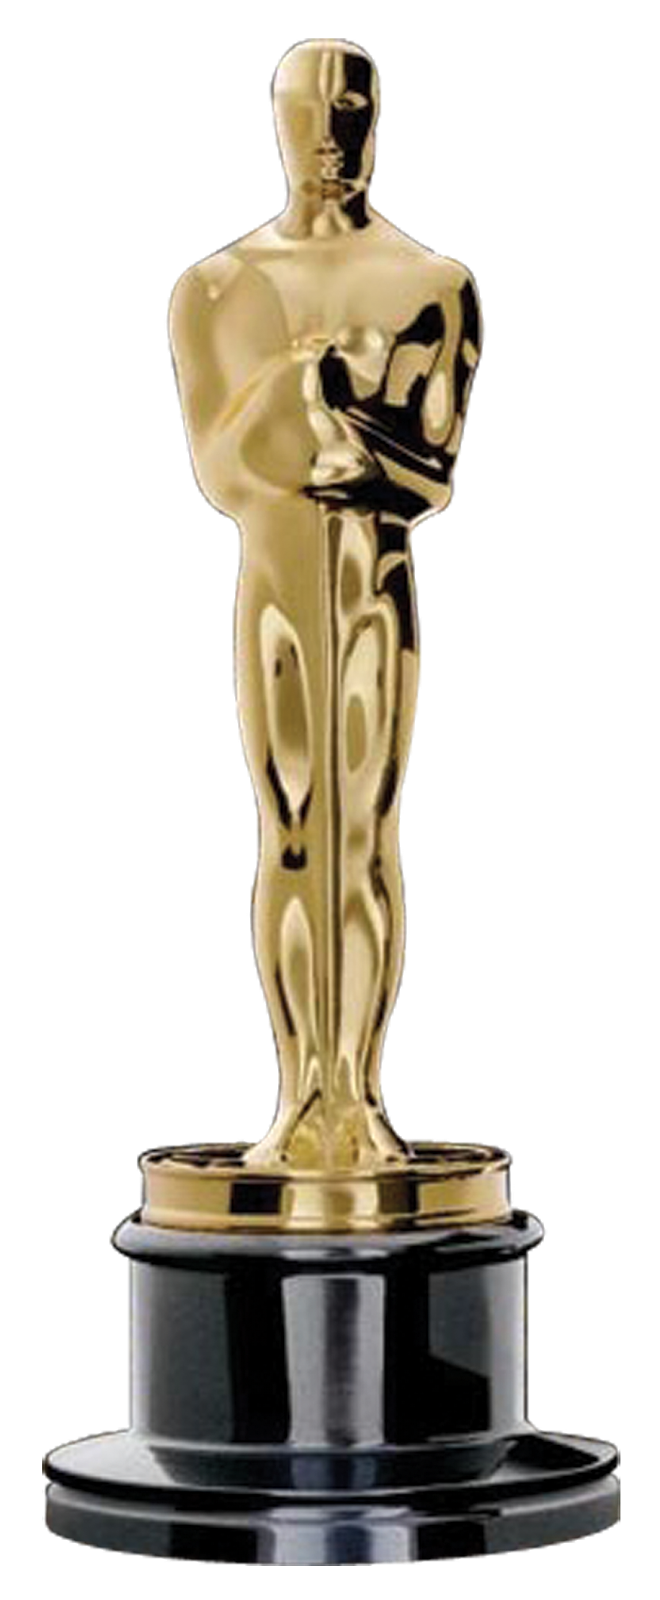 Oscar Academy Awards PNG achtergrondafbeelding